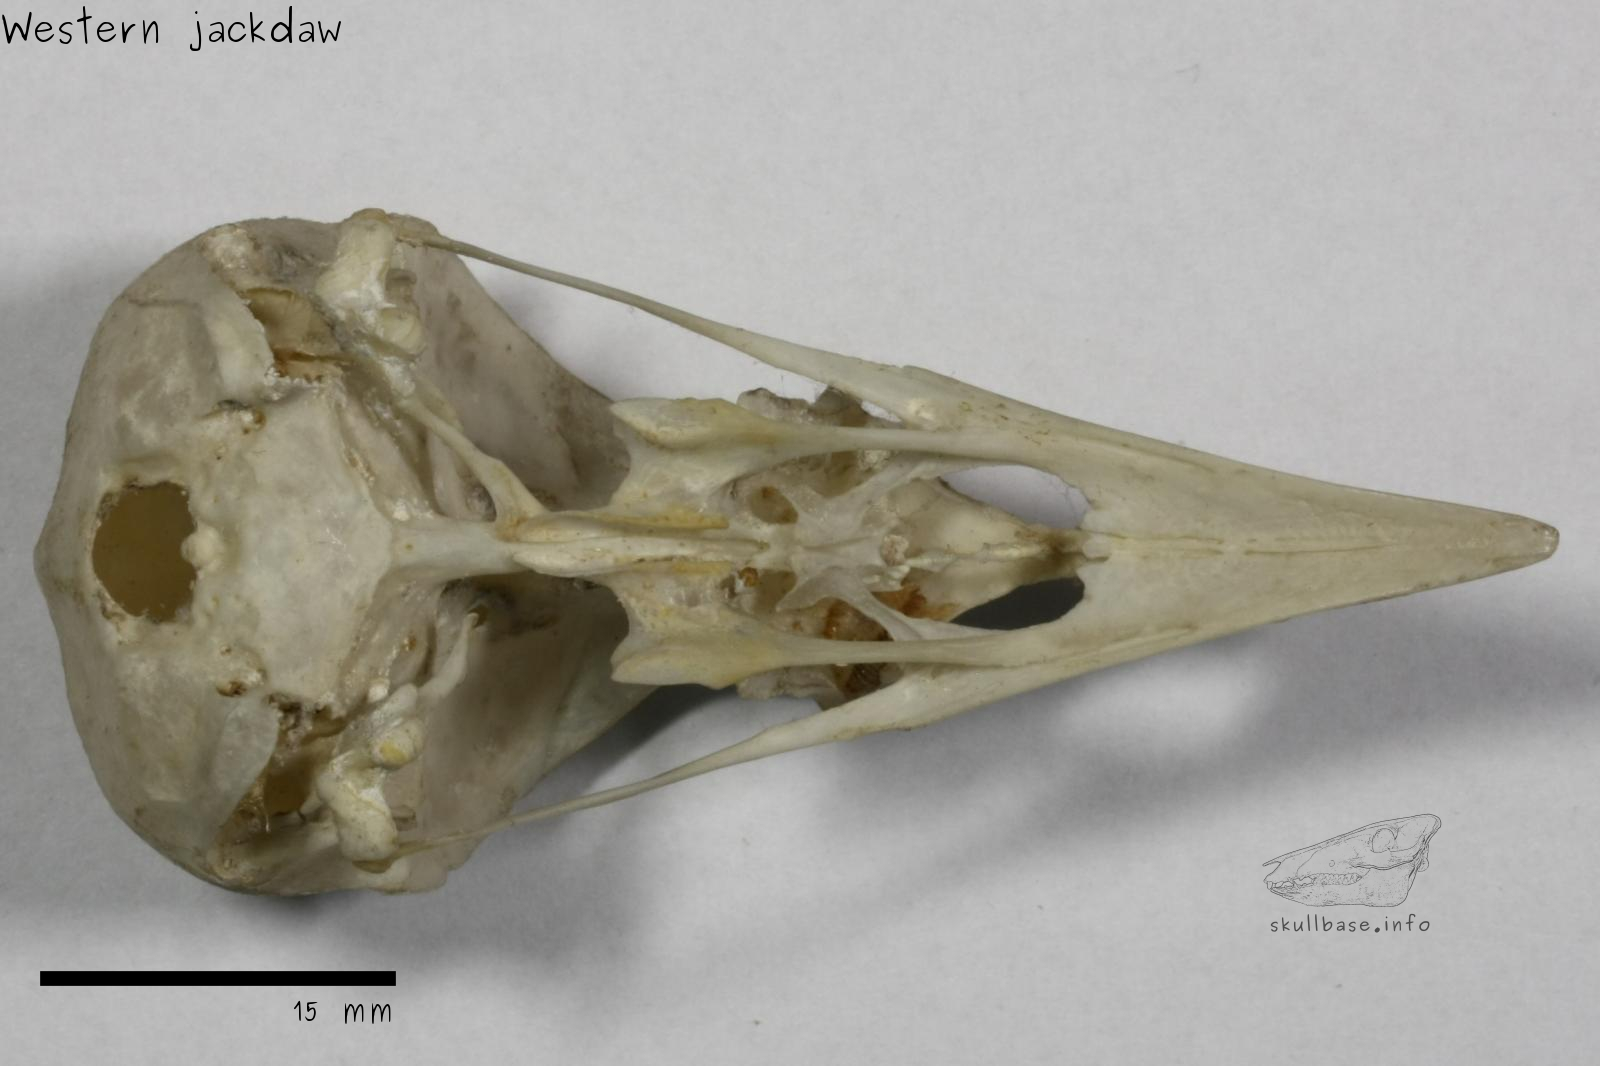 Western jackdaw (Corvus monedula) skull ventral view